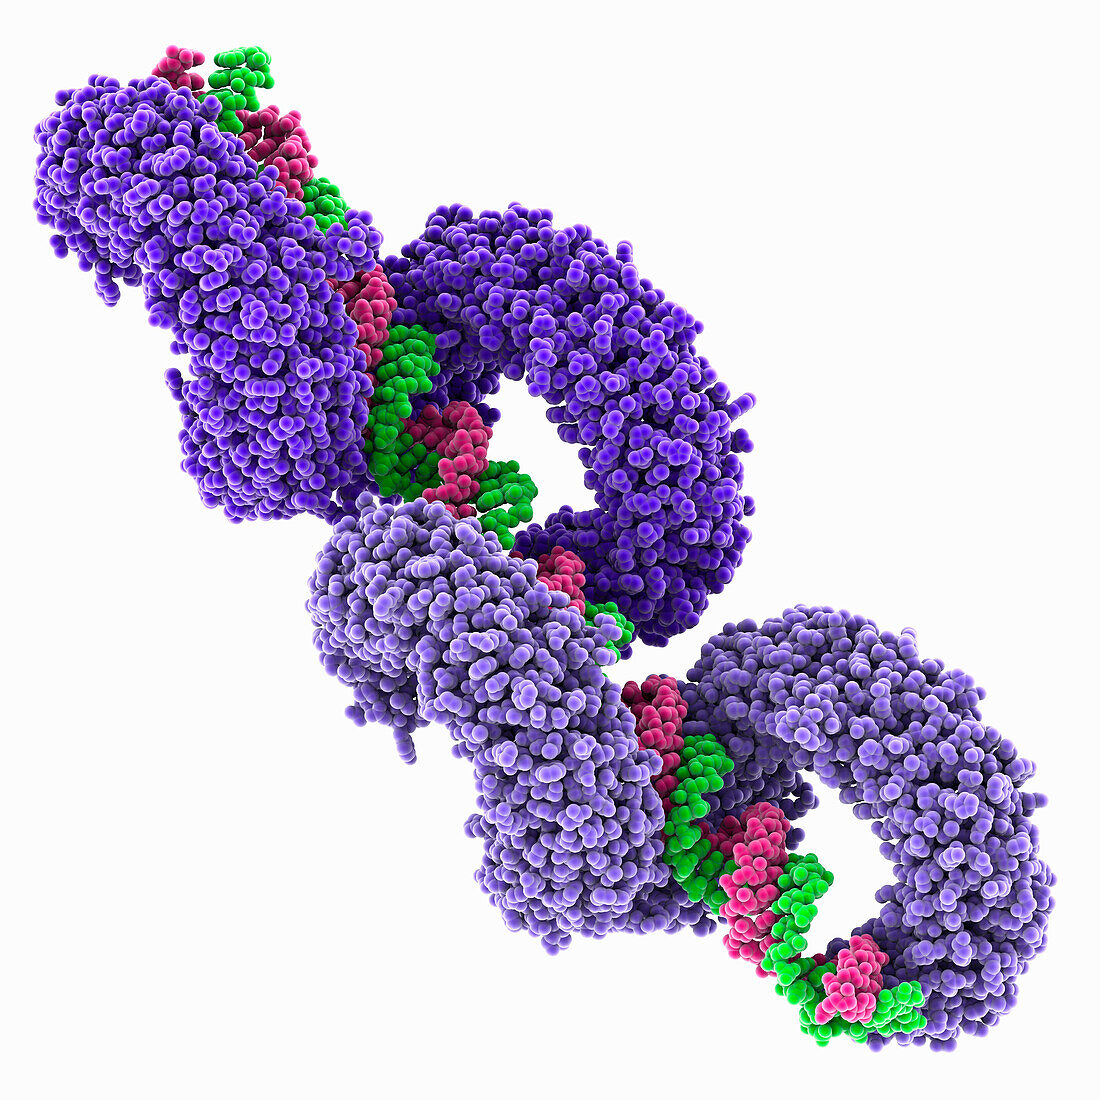 Toll-like receptor 3 complexed with RNA, molecular model